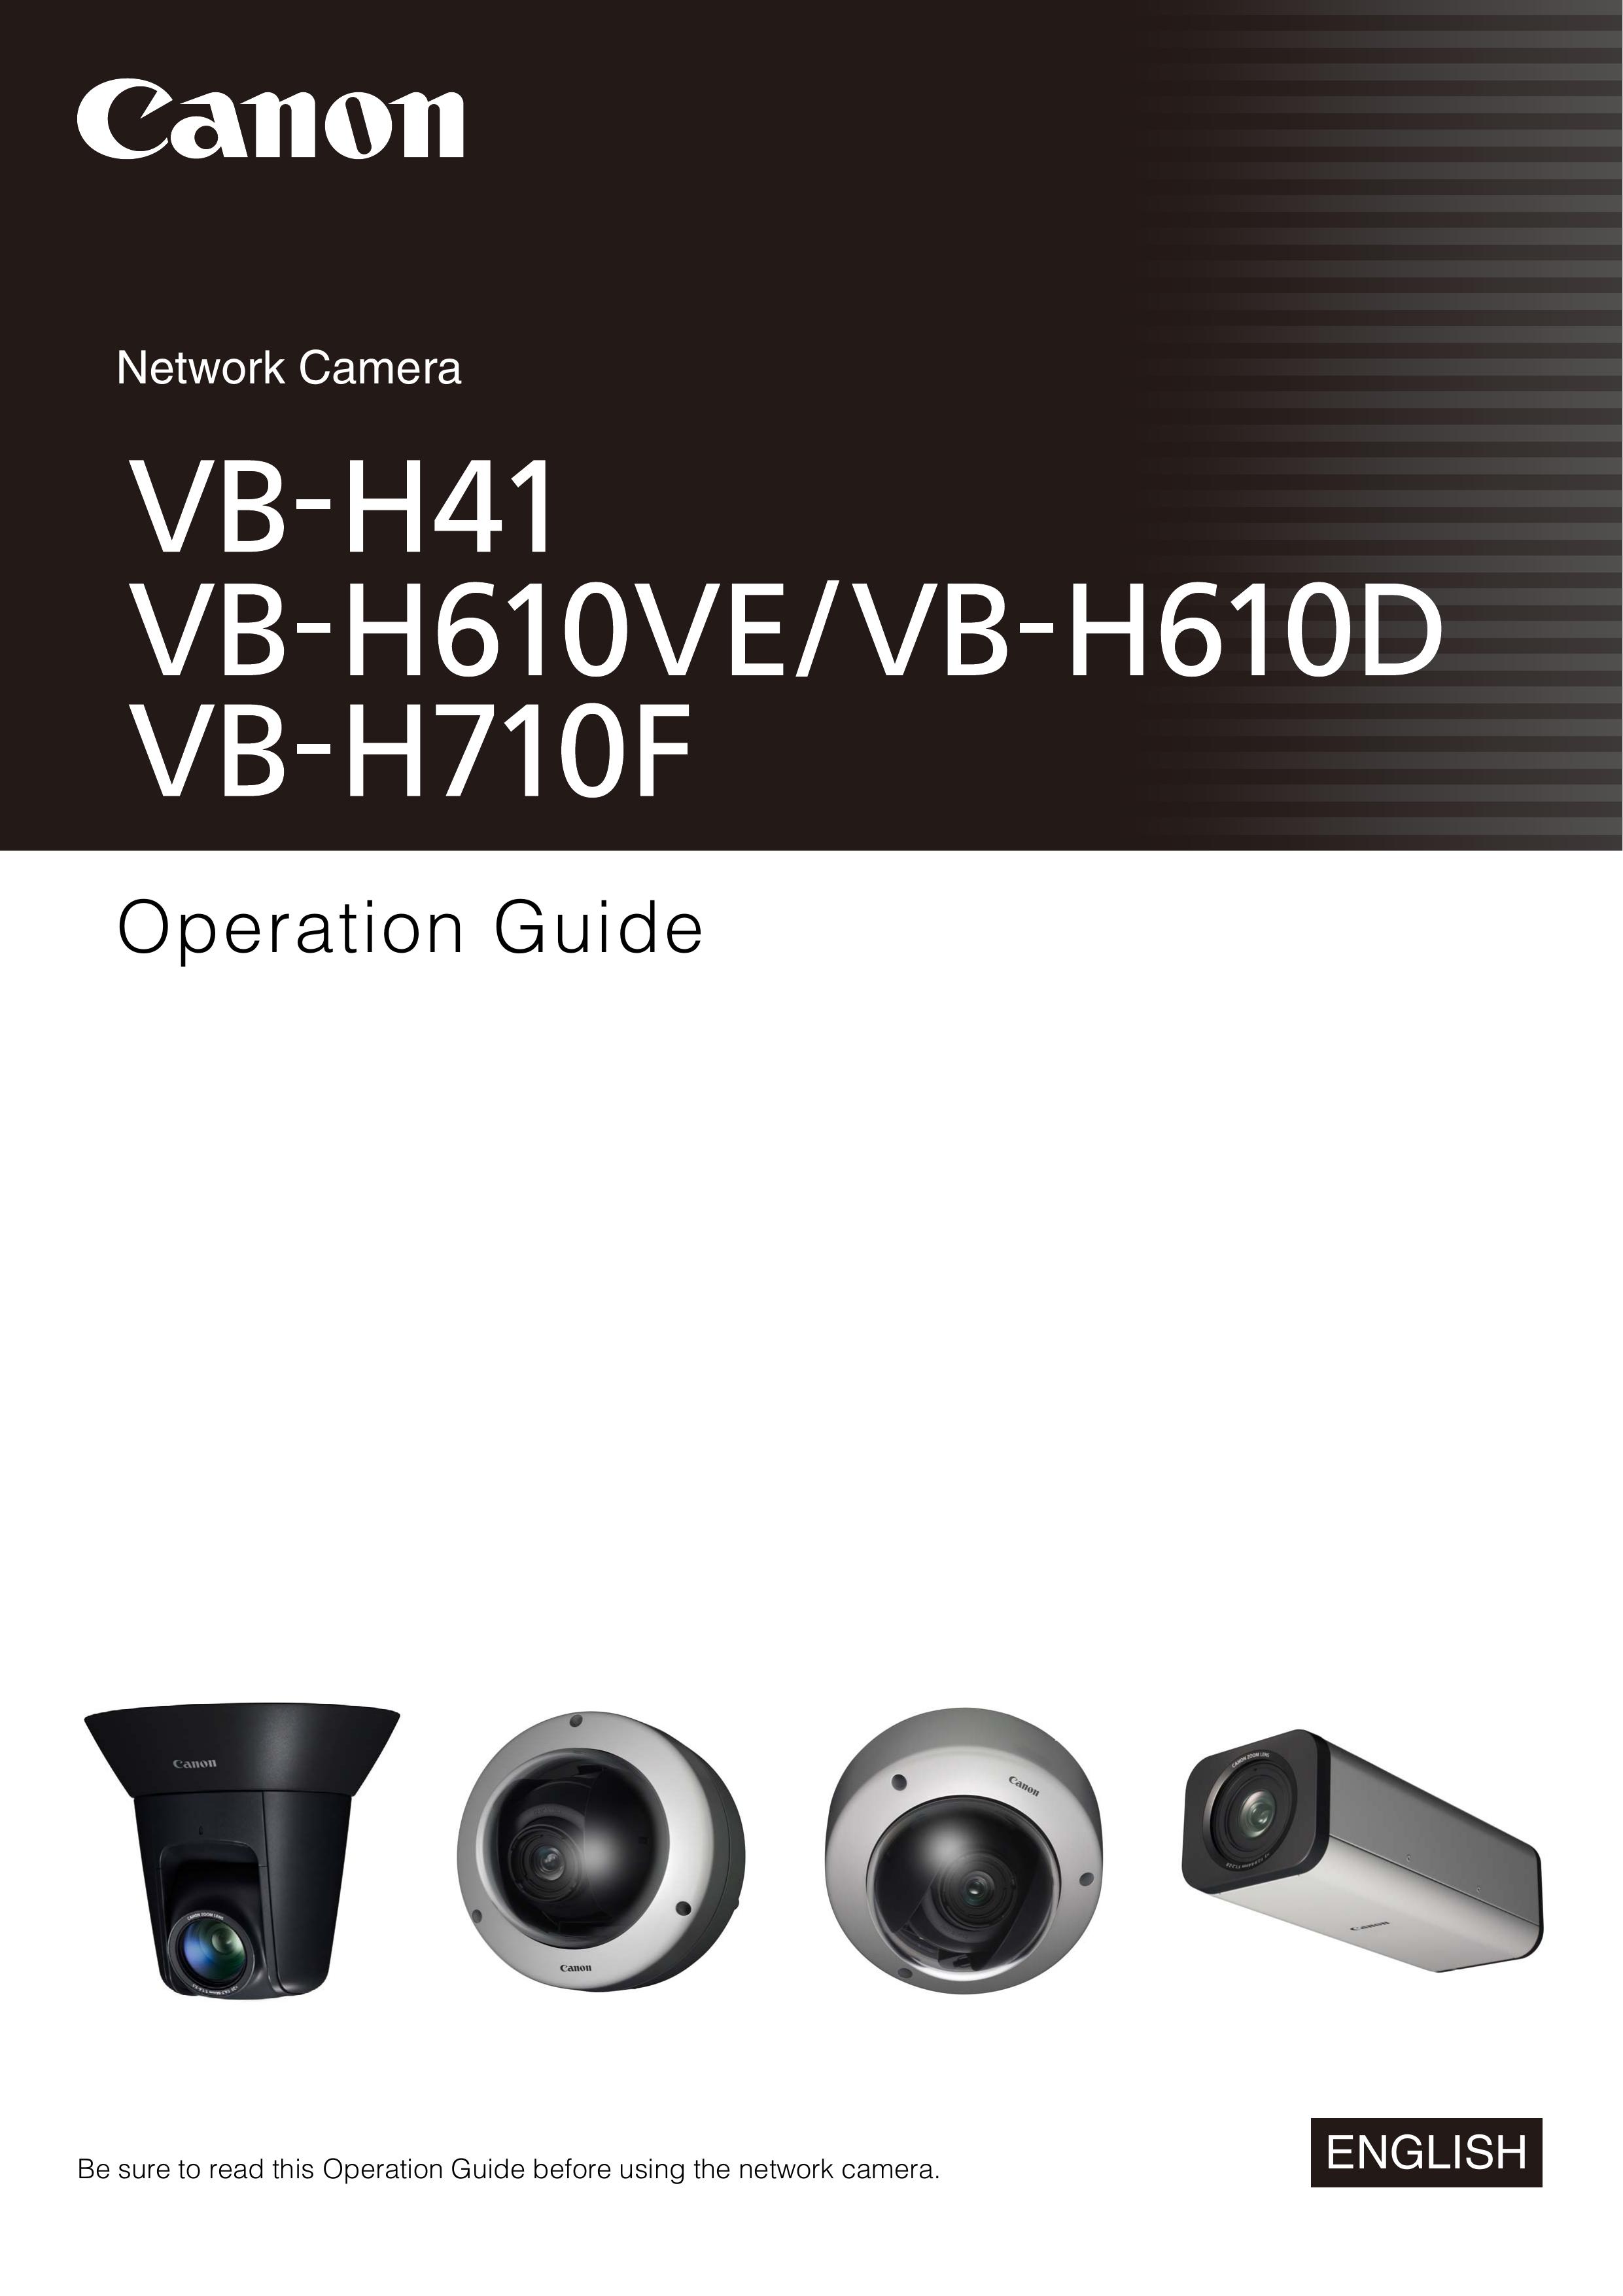 Canon VB-H710F Security Camera User Manual